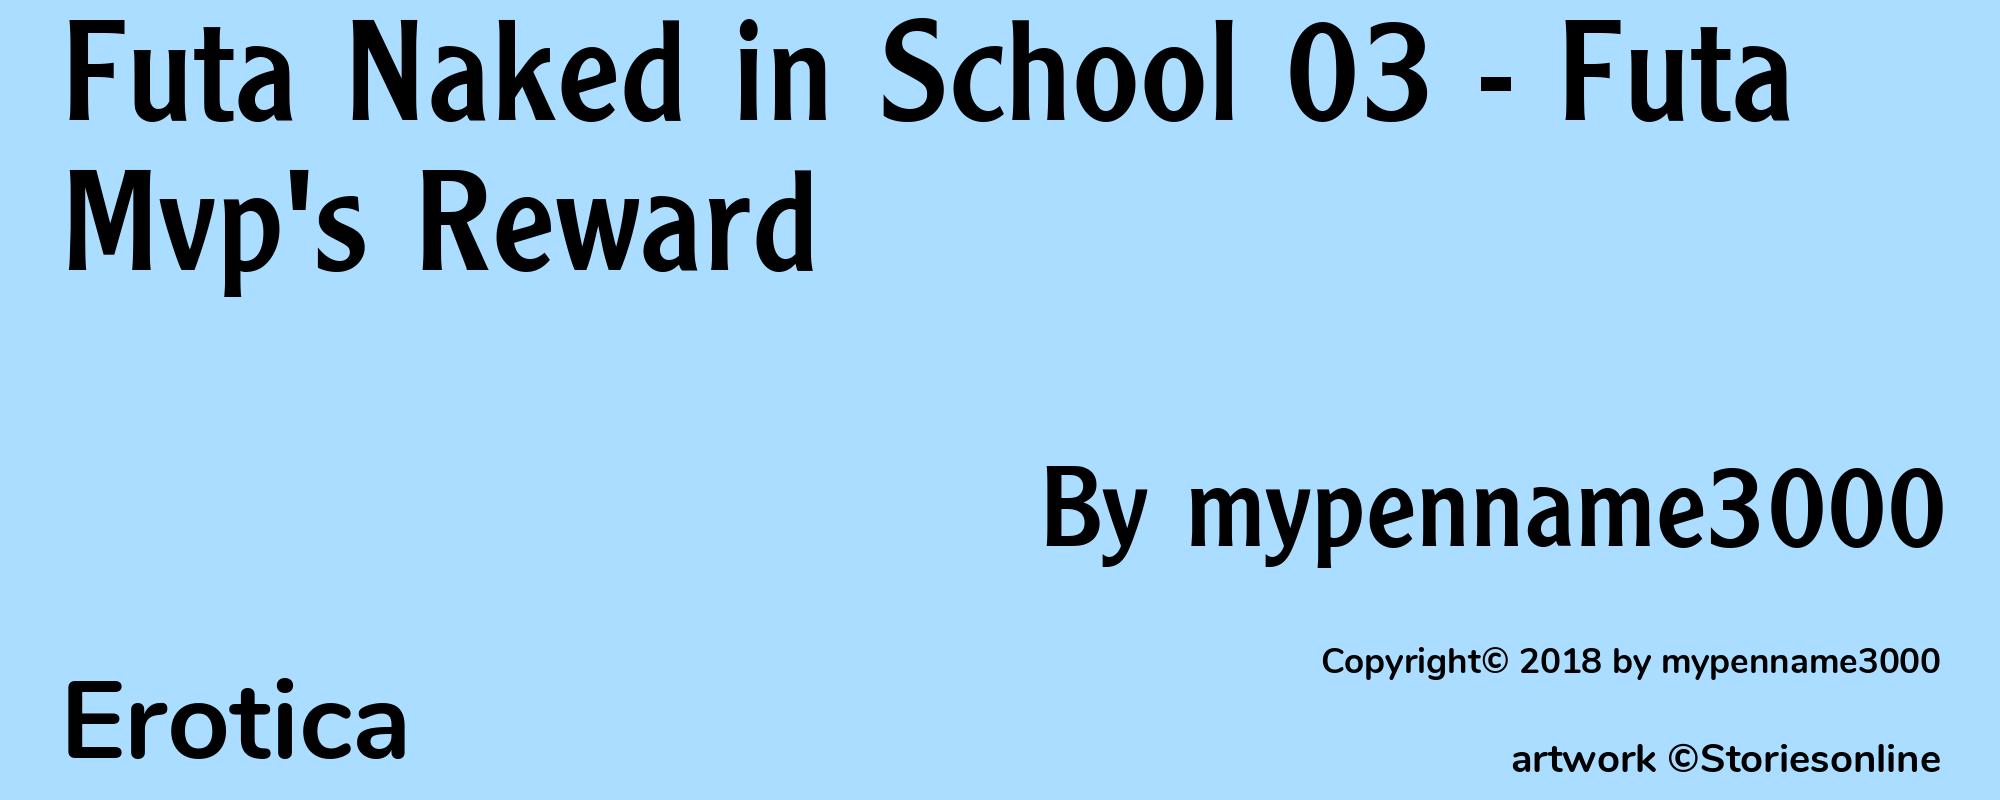 Futa Naked in School 03 - Futa Mvp's Reward - Cover